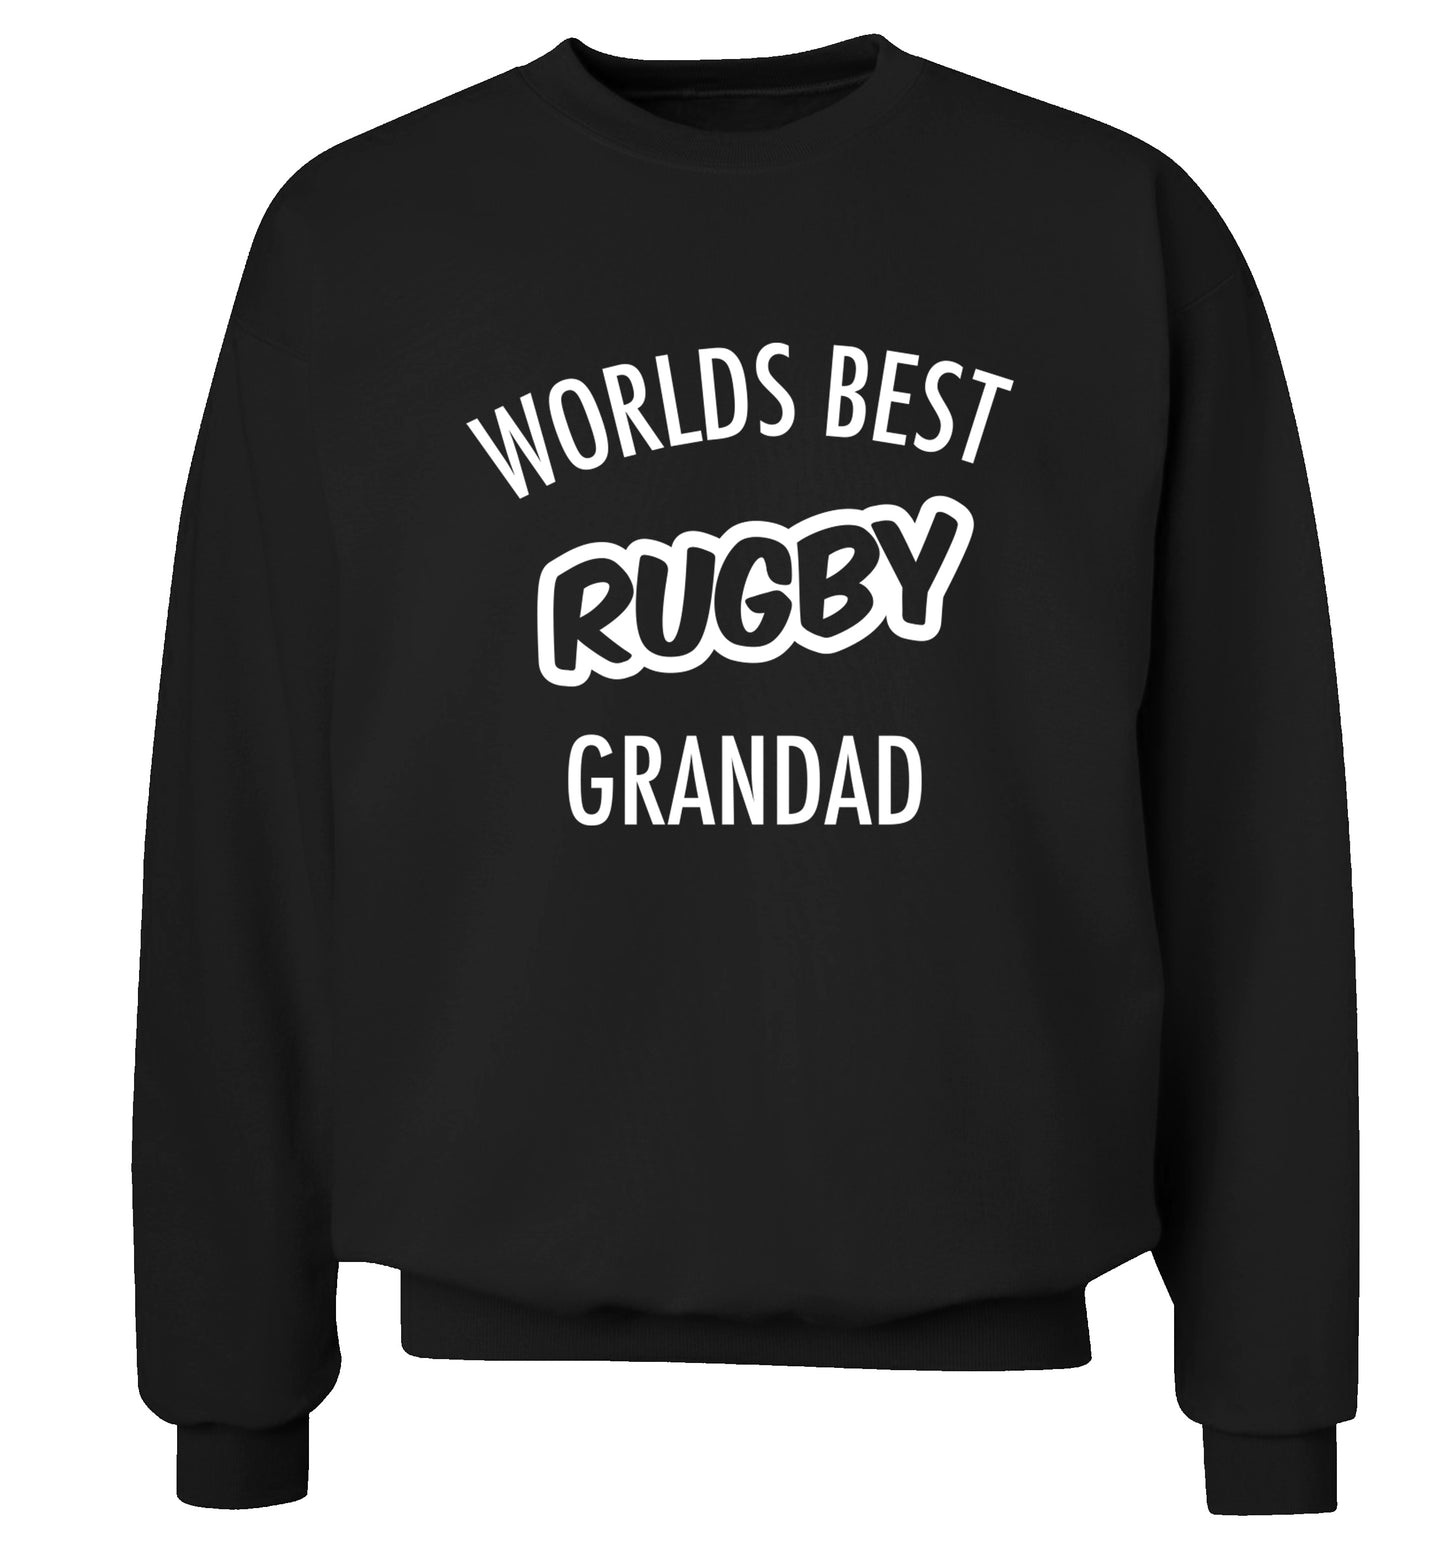 Worlds best rugby grandad Adult's unisex black Sweater 2XL